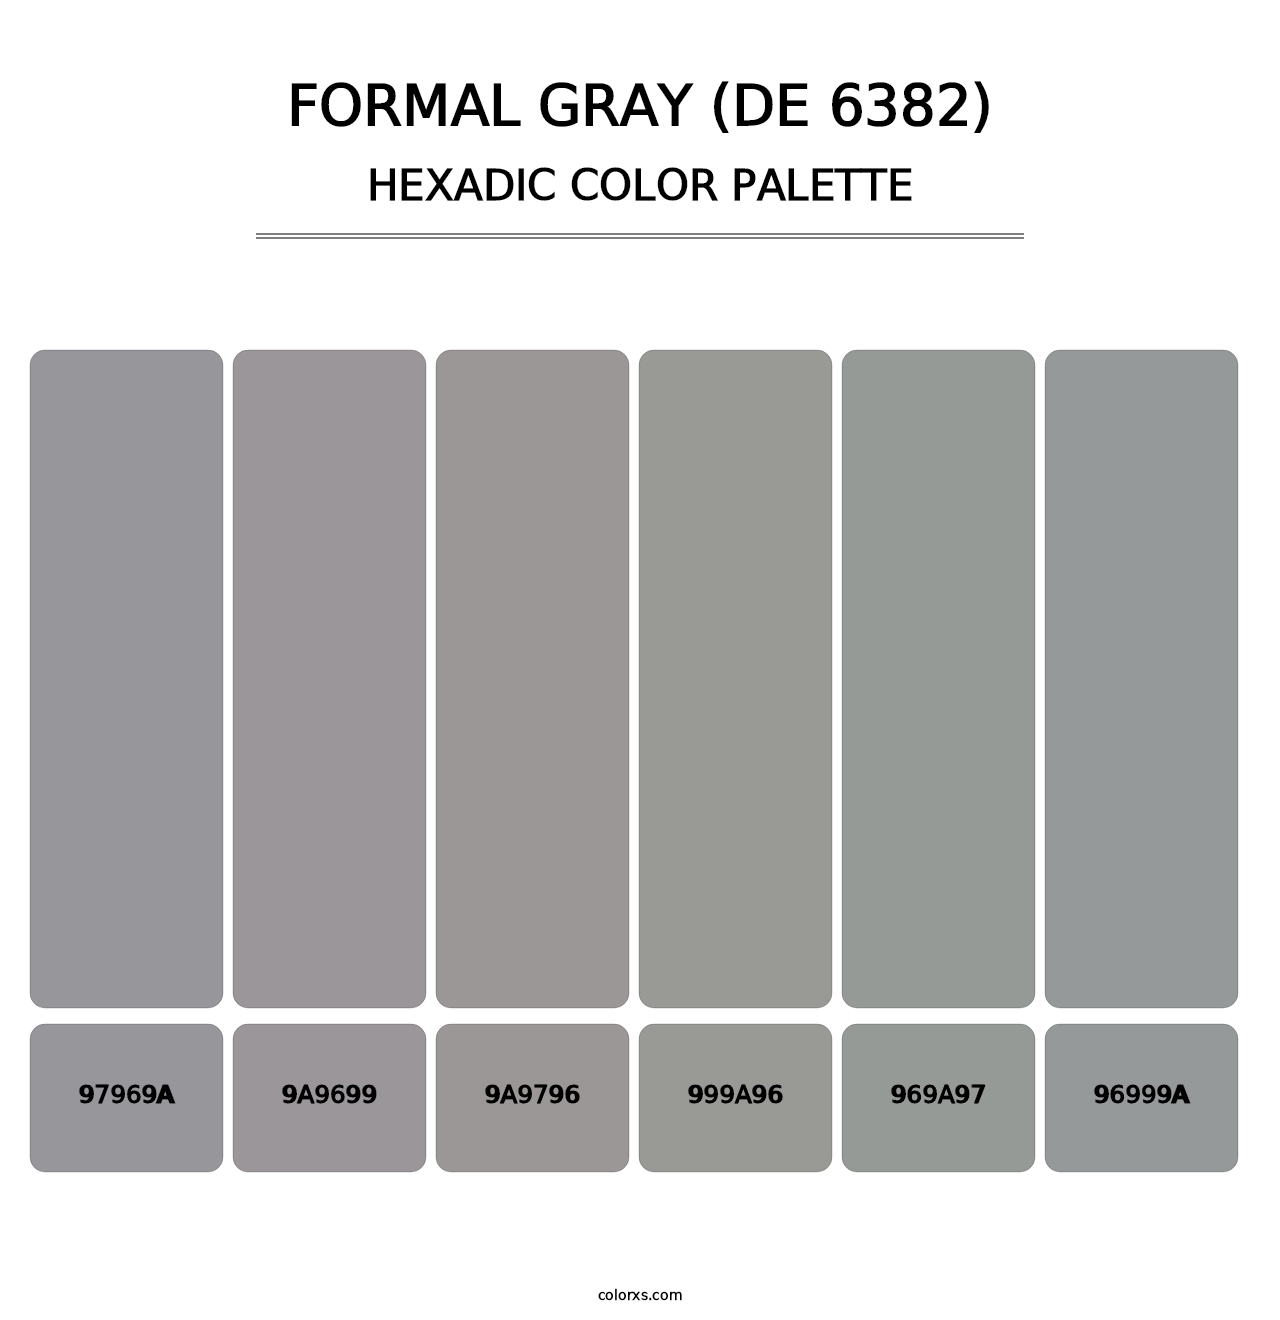 Formal Gray (DE 6382) - Hexadic Color Palette